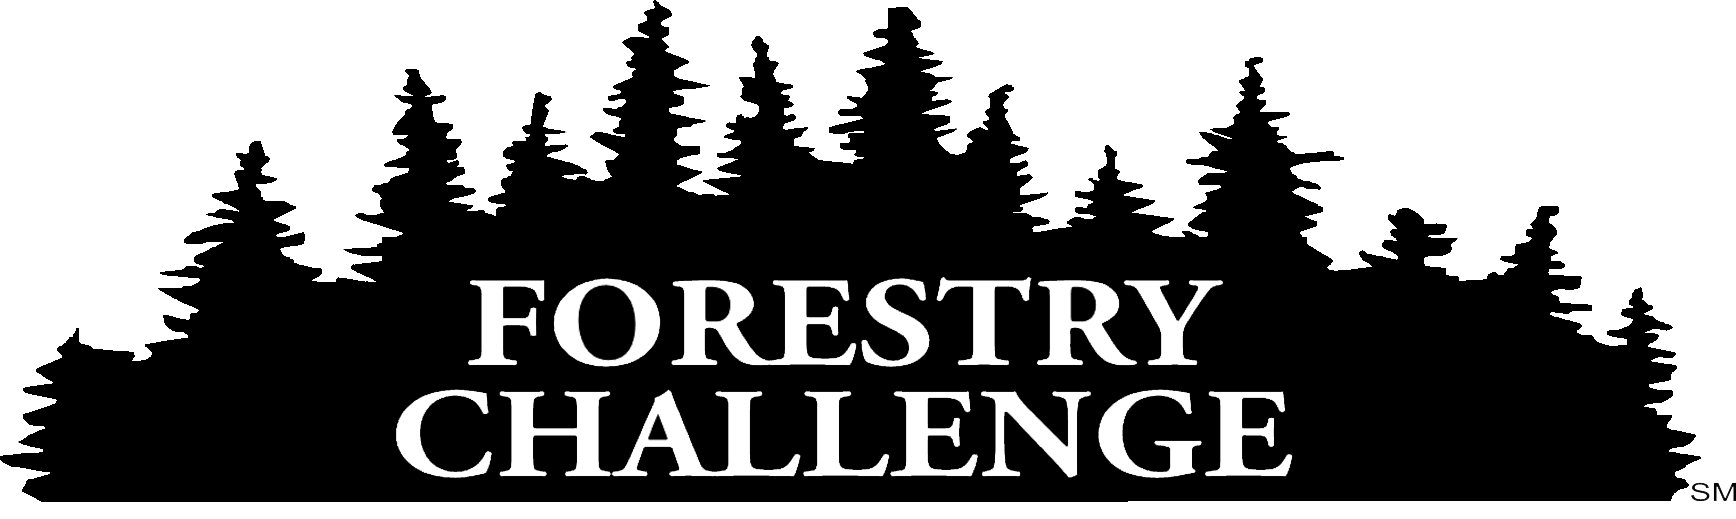 LOGO - Forestry Challenge logo